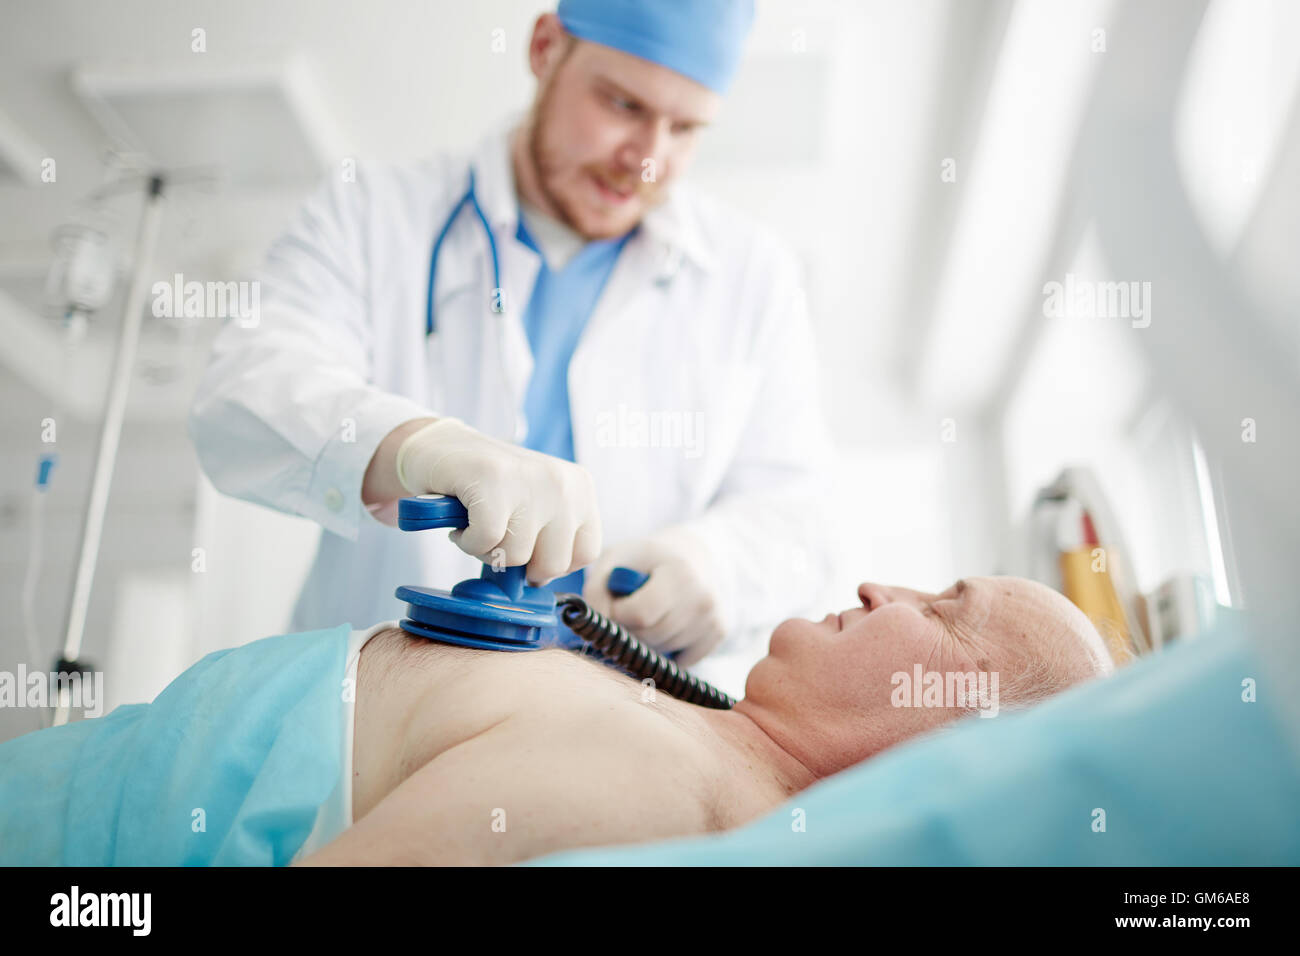 The patient is unconscious Stock Photo